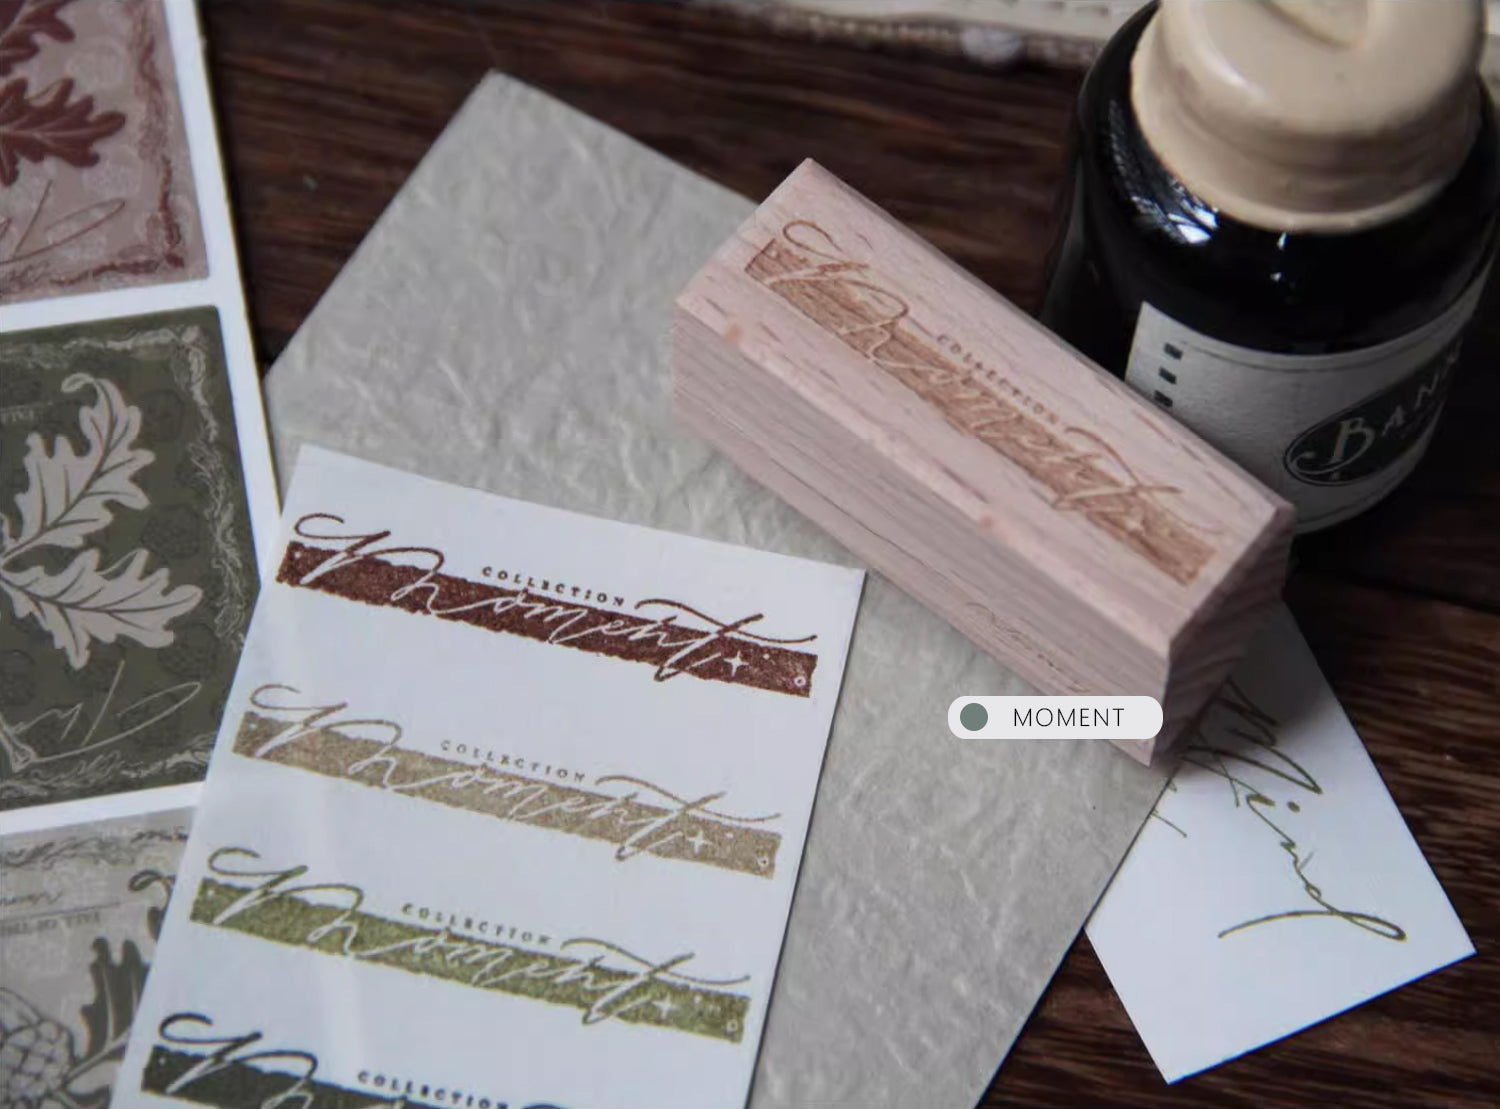 Neinei Illustration Stamps Set: Sealing Wax